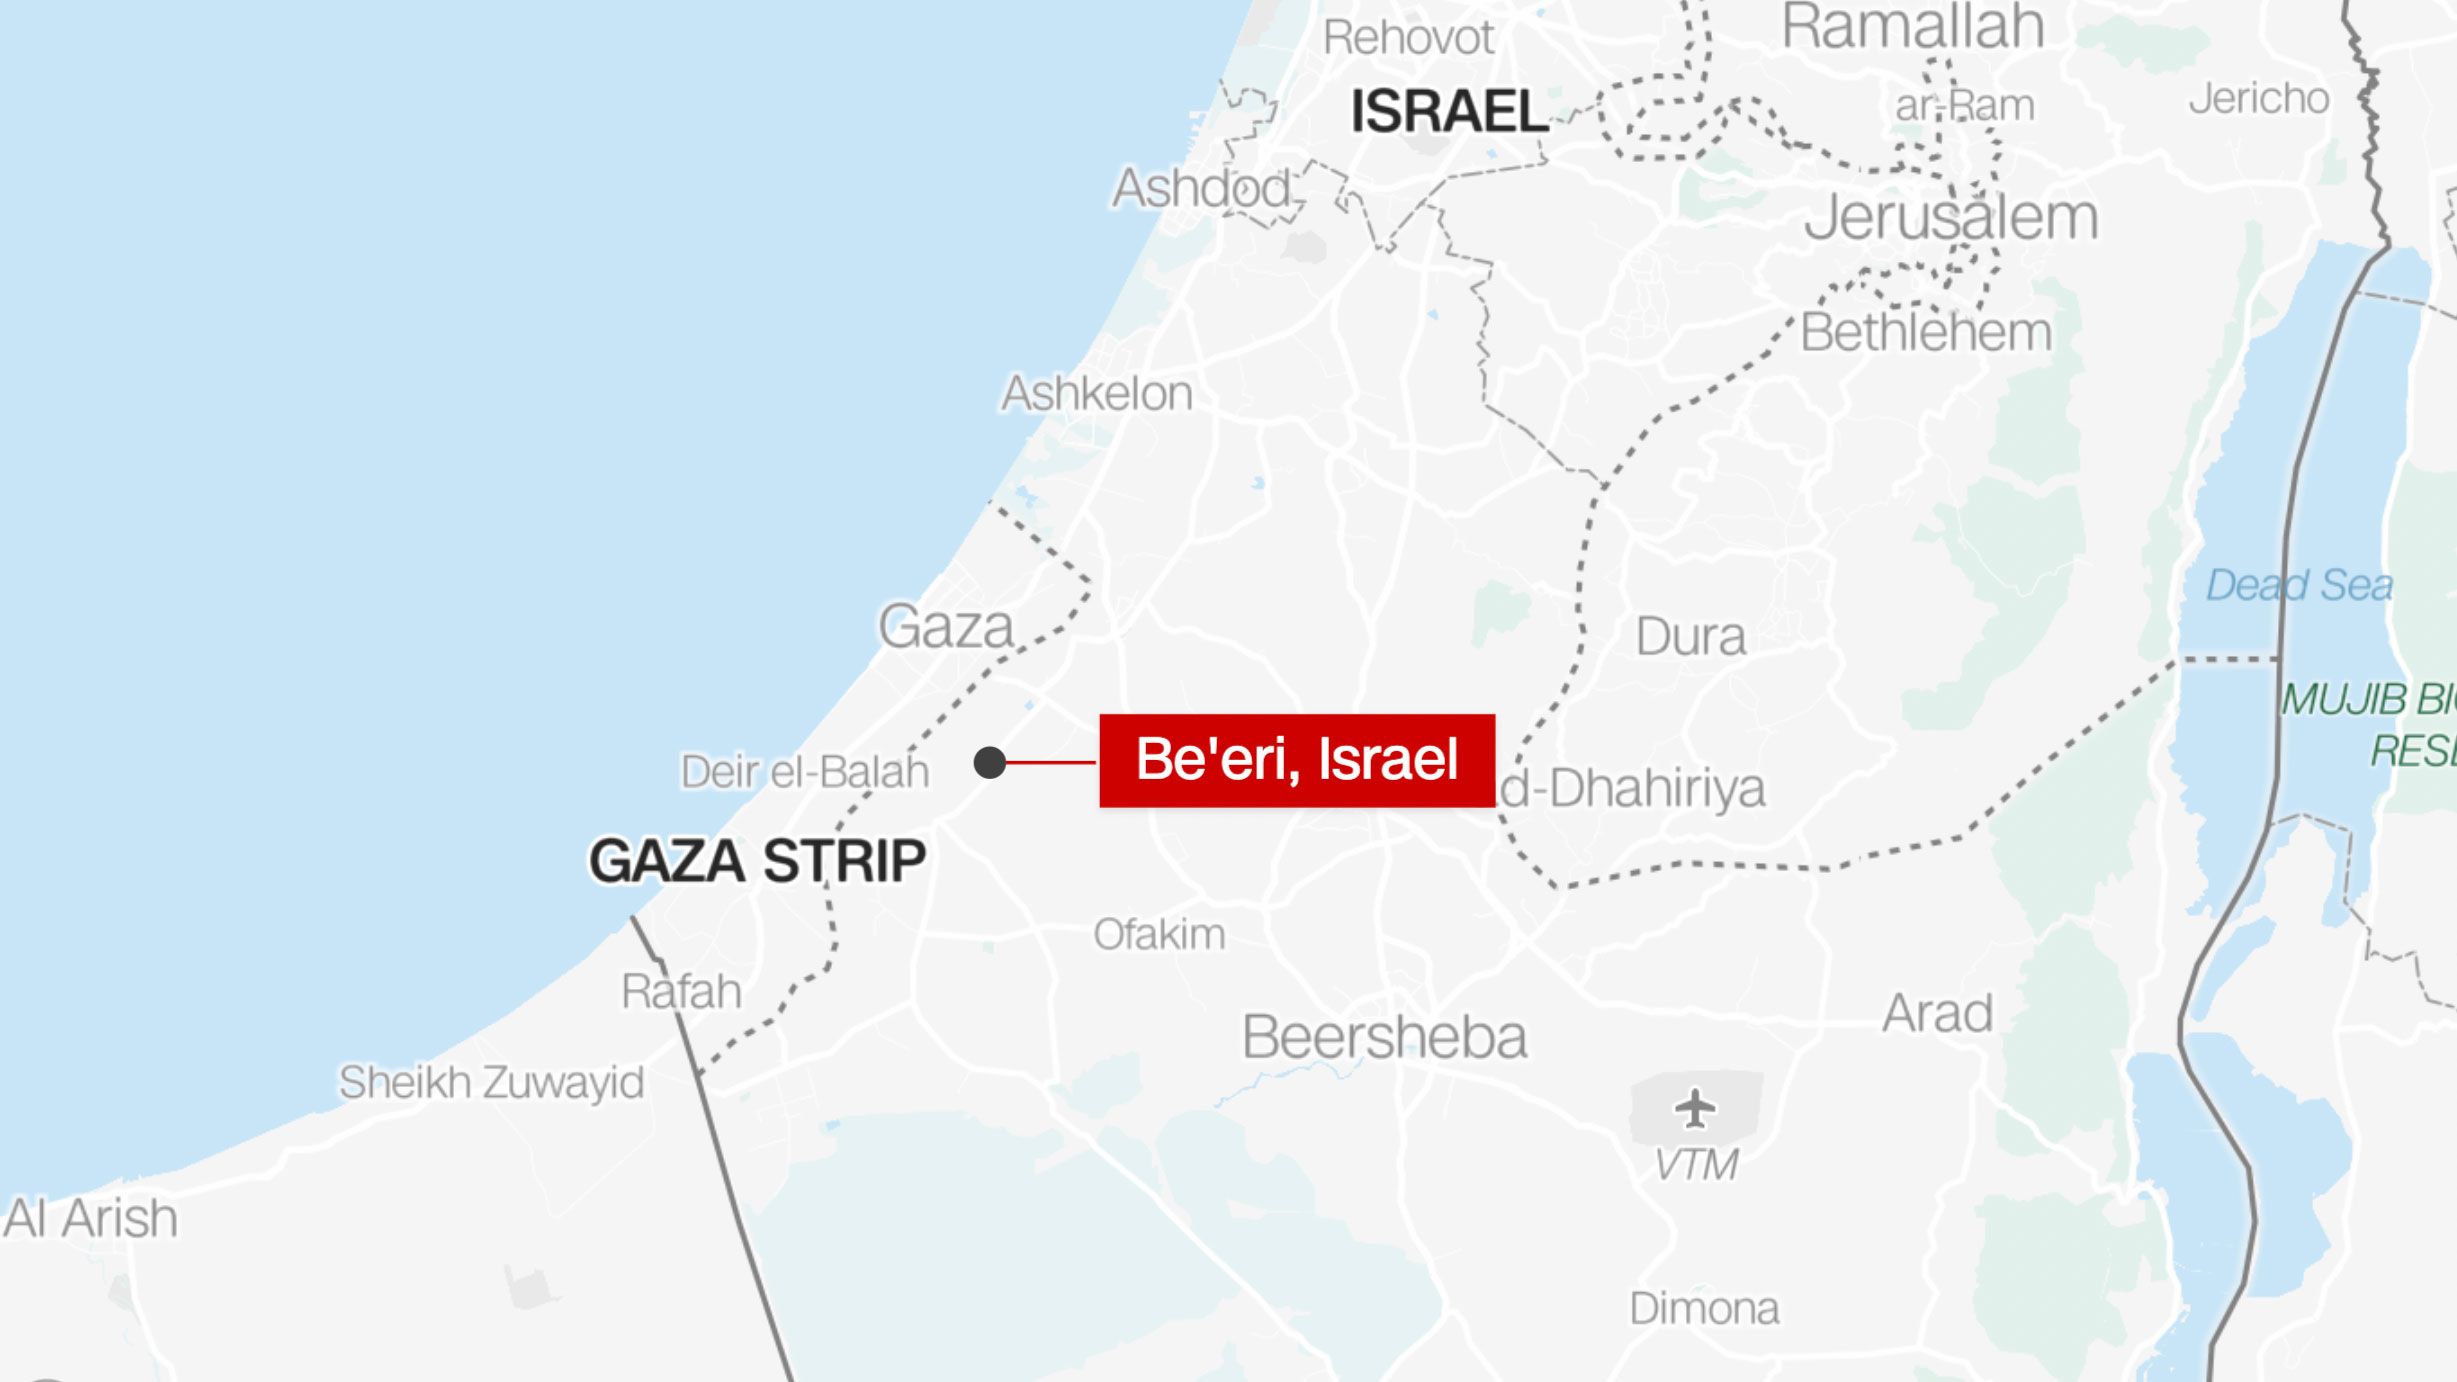 Be'eri: More than 100 bodies discovered in Israeli kibbutz | CNN